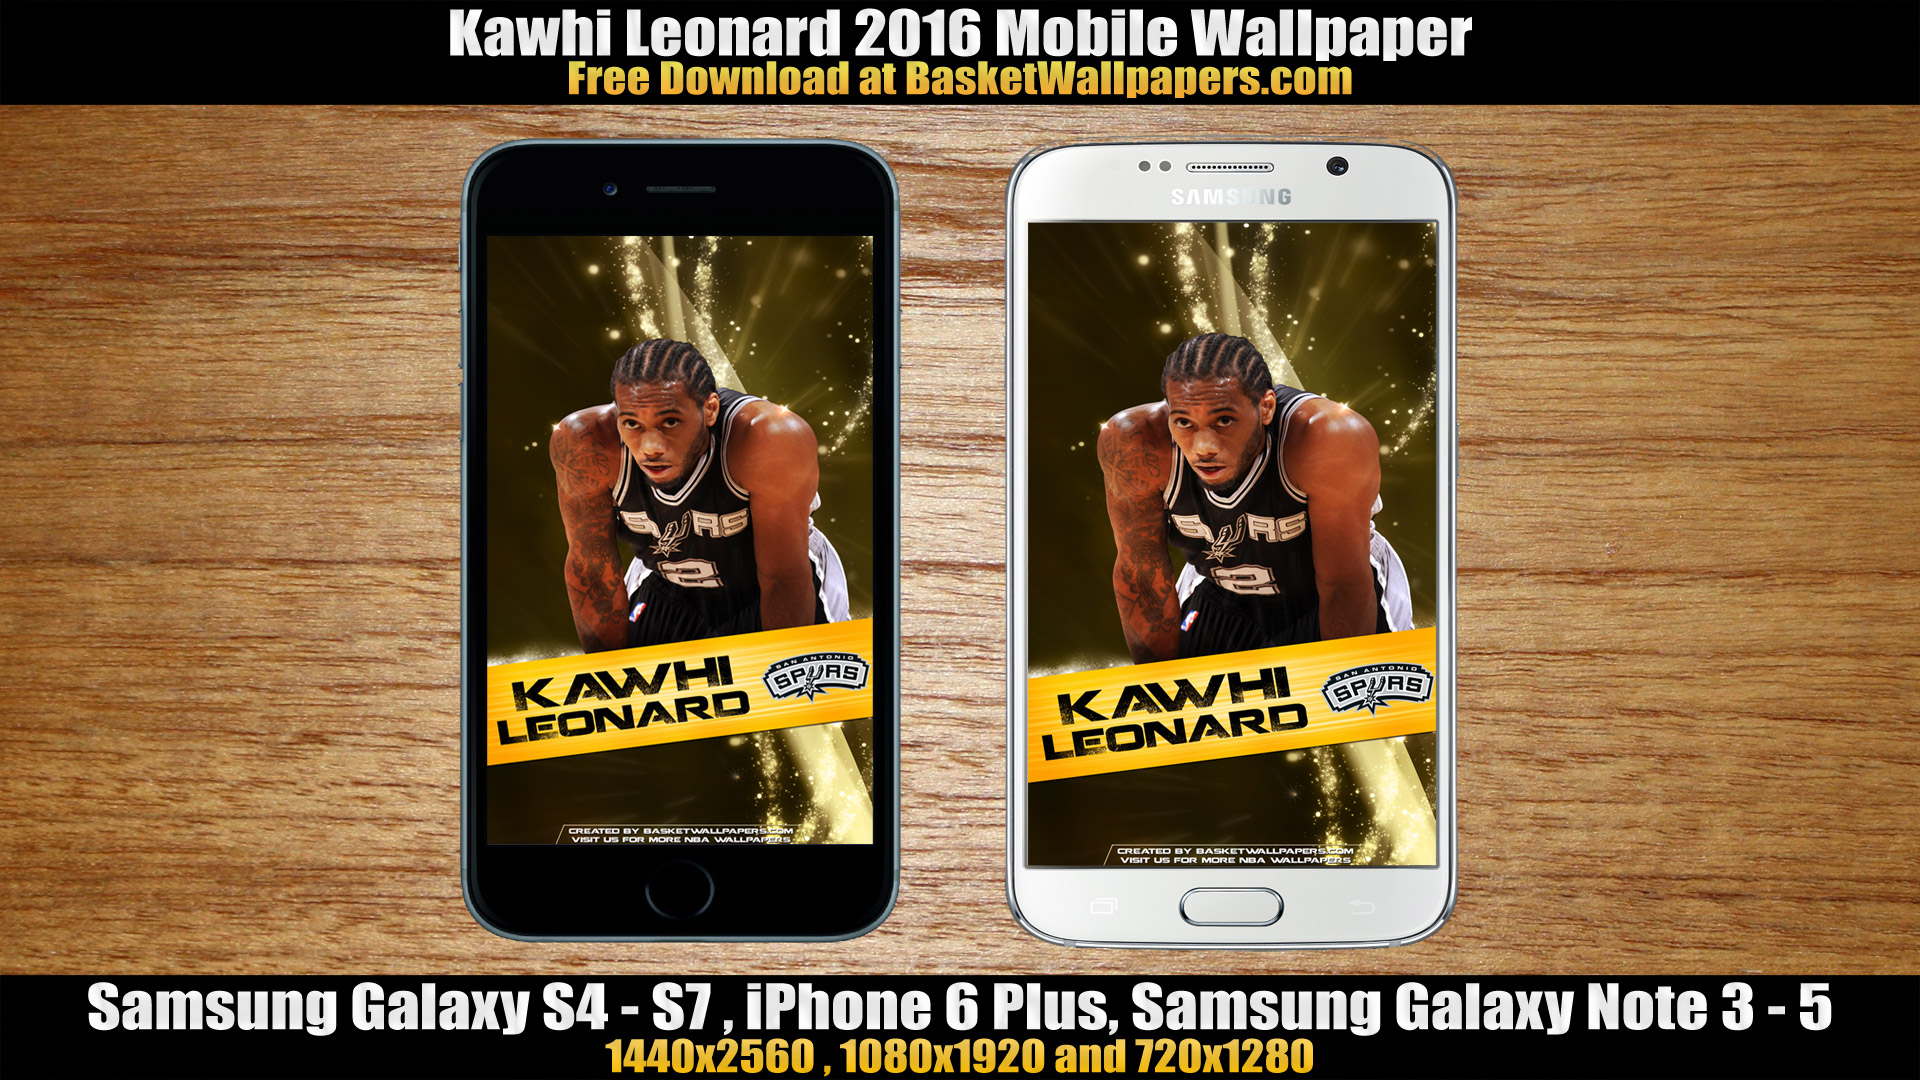 kawhi leonard fondo de pantalla para iphone,teléfono móvil,dispositivo de comunicaciones portátil,iphone,fuente,artilugio